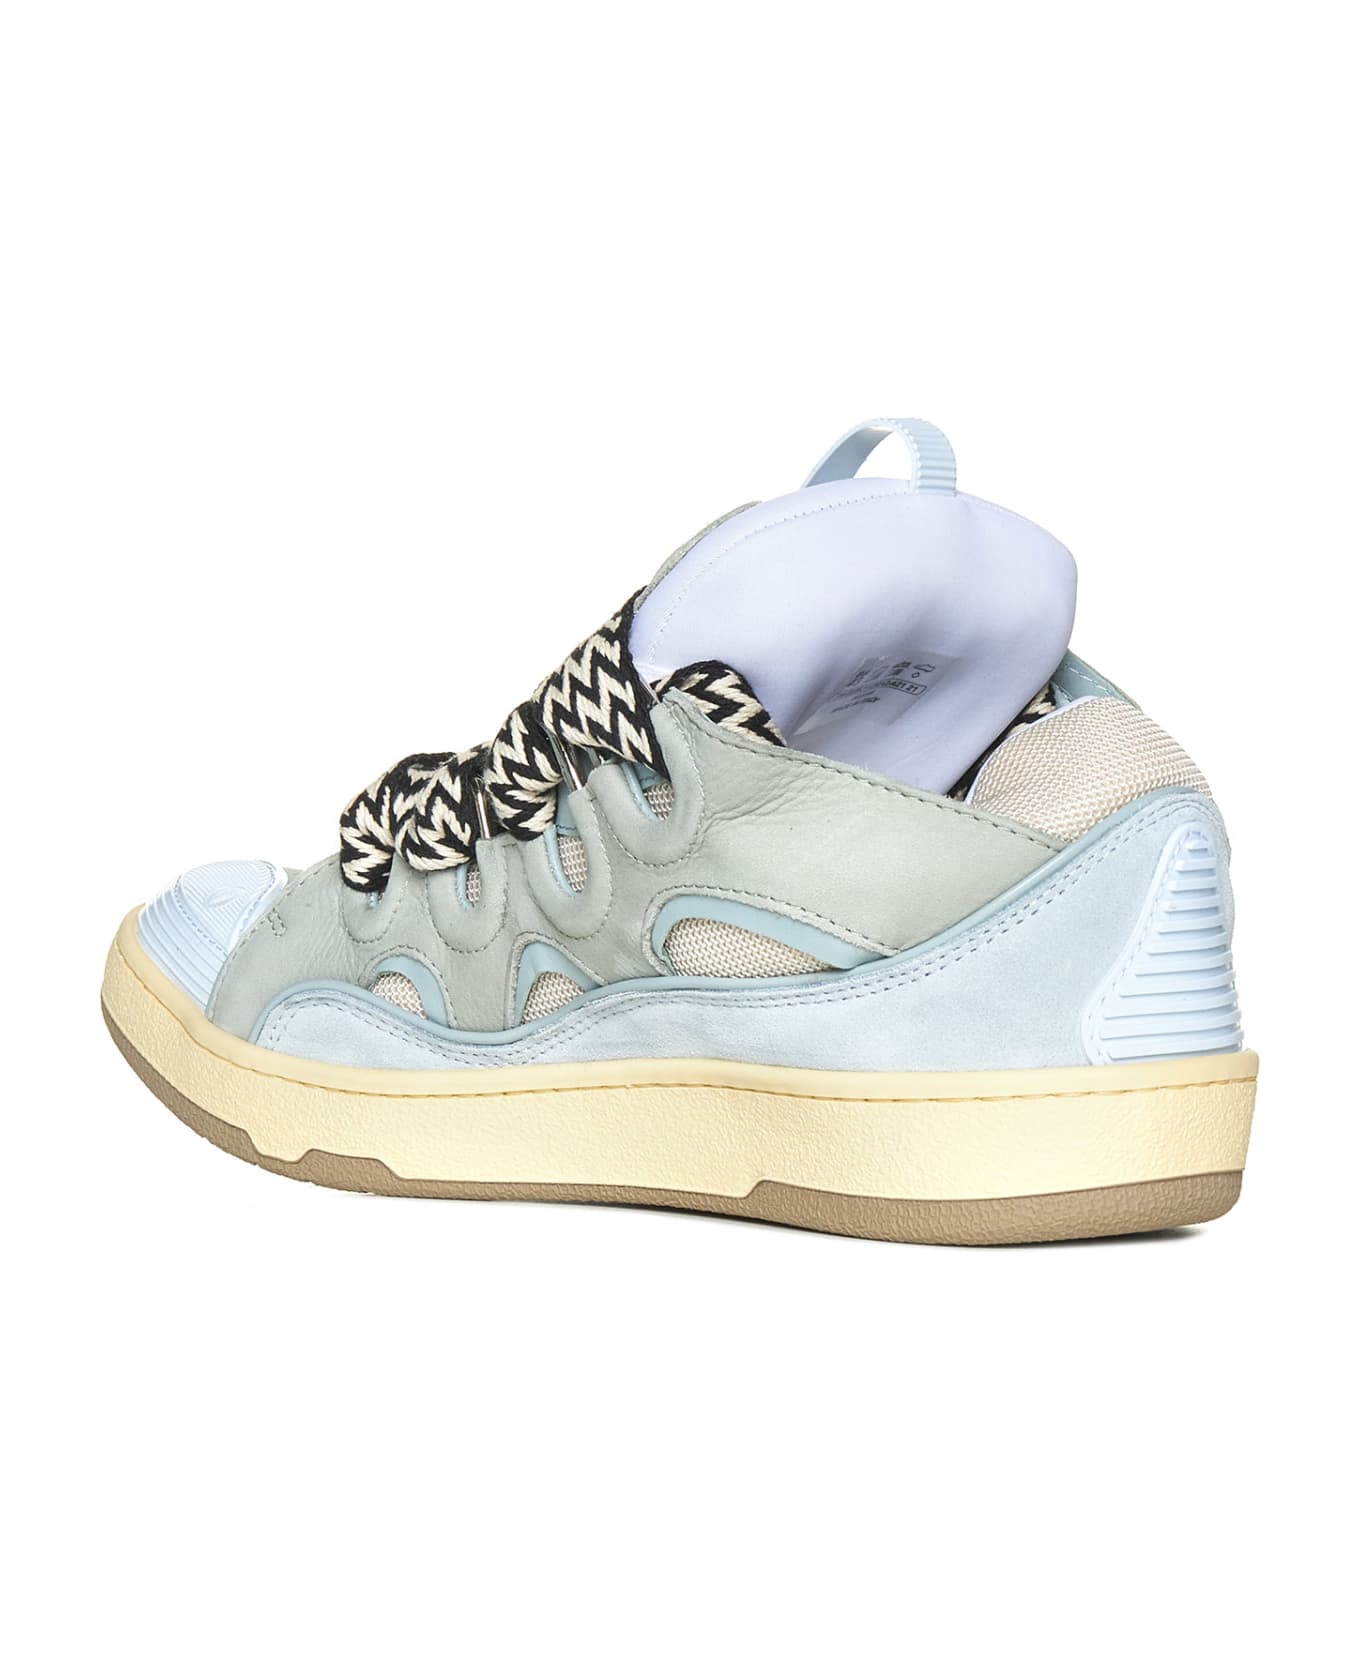 Lanvin Sneakers - Pale blue スニーカー